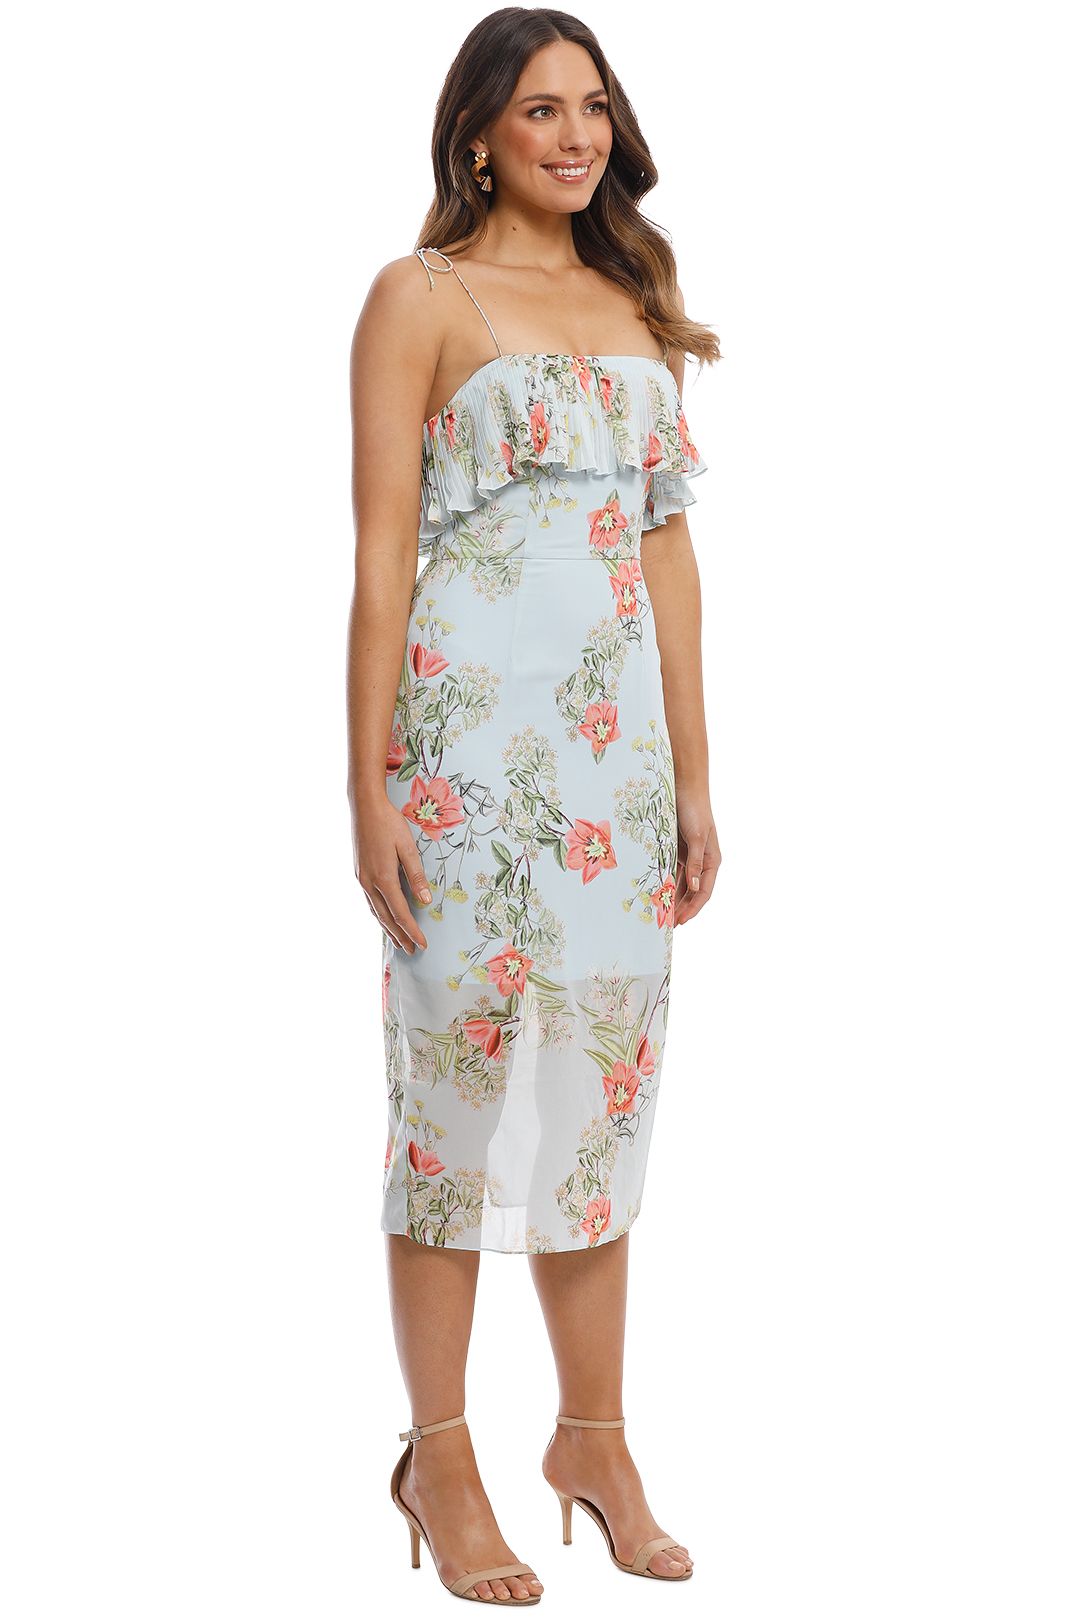 Cooper St - Blooming Knee Length Dress - Print Light - Side